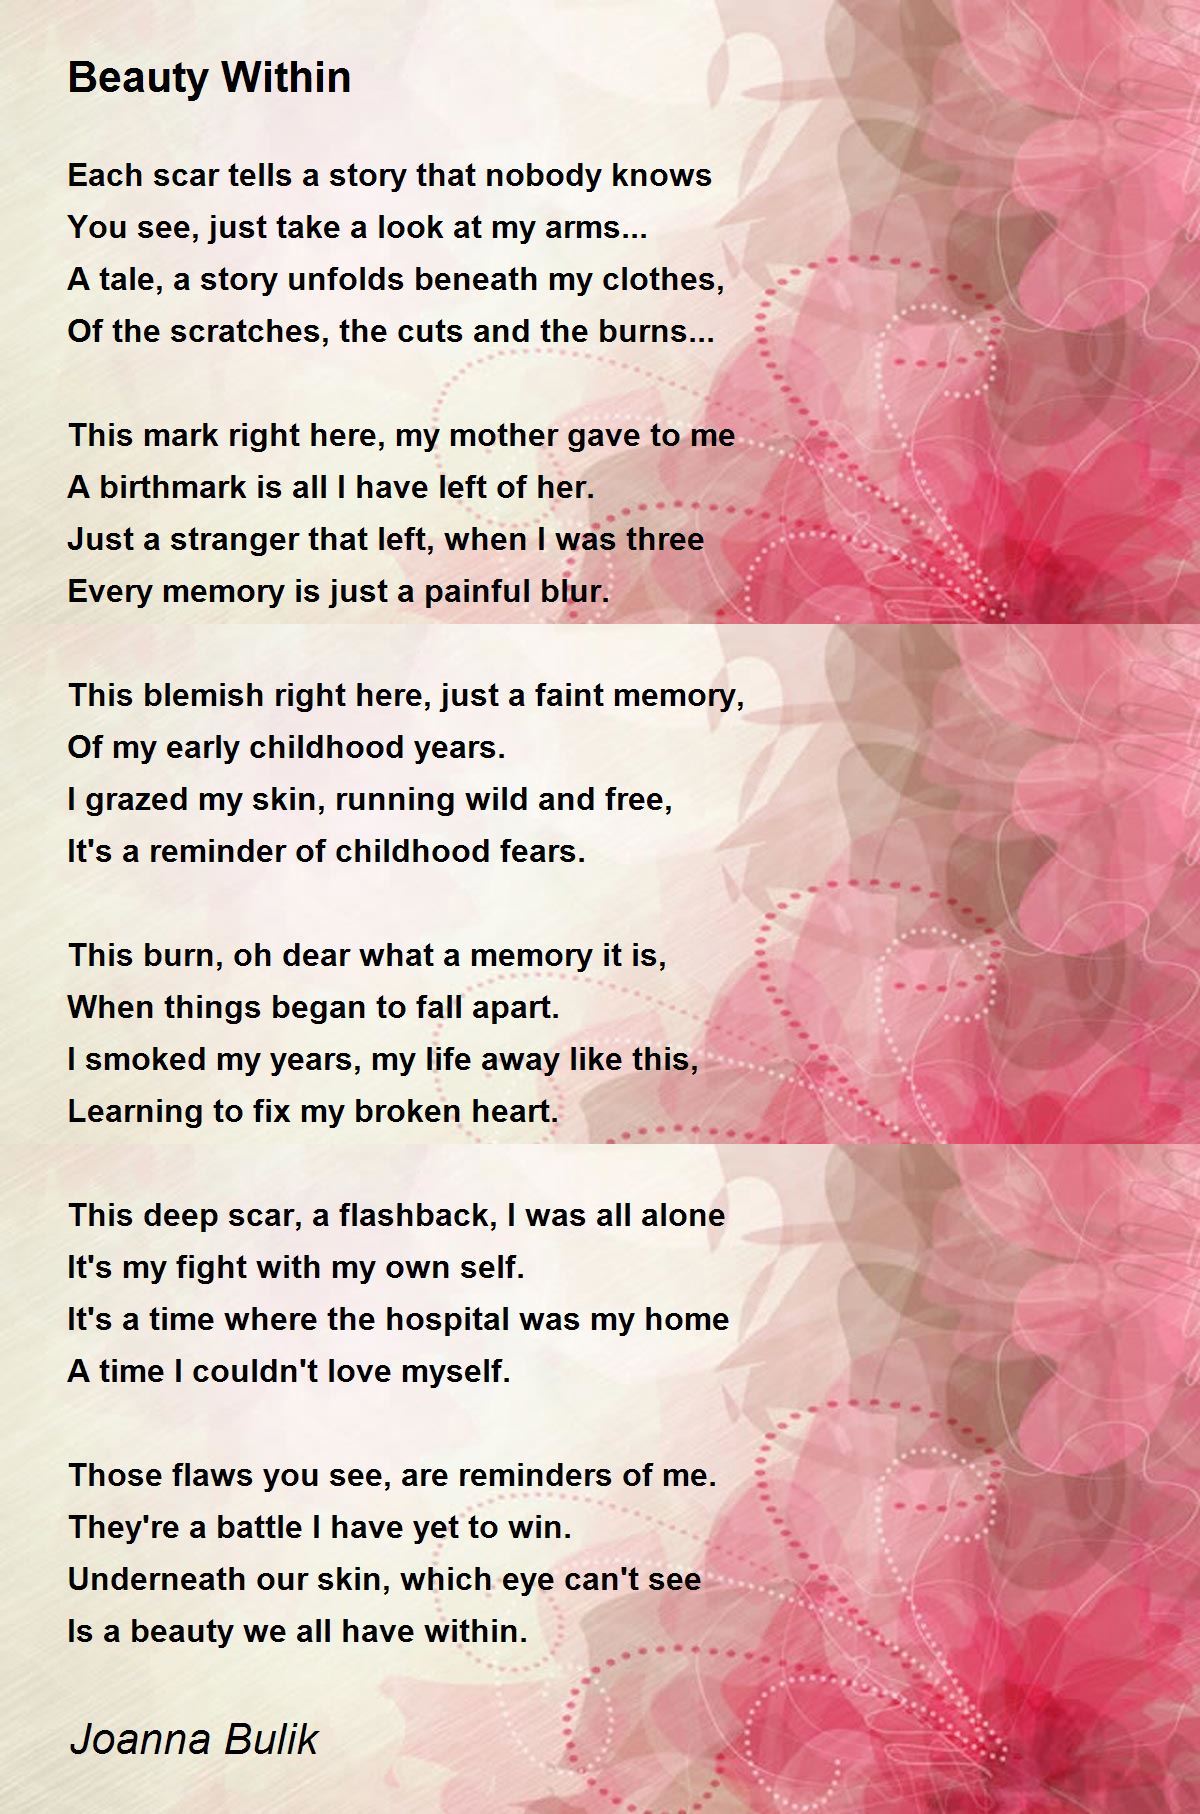 Beauty Within by Joanna Bulik - Beauty Within Poem